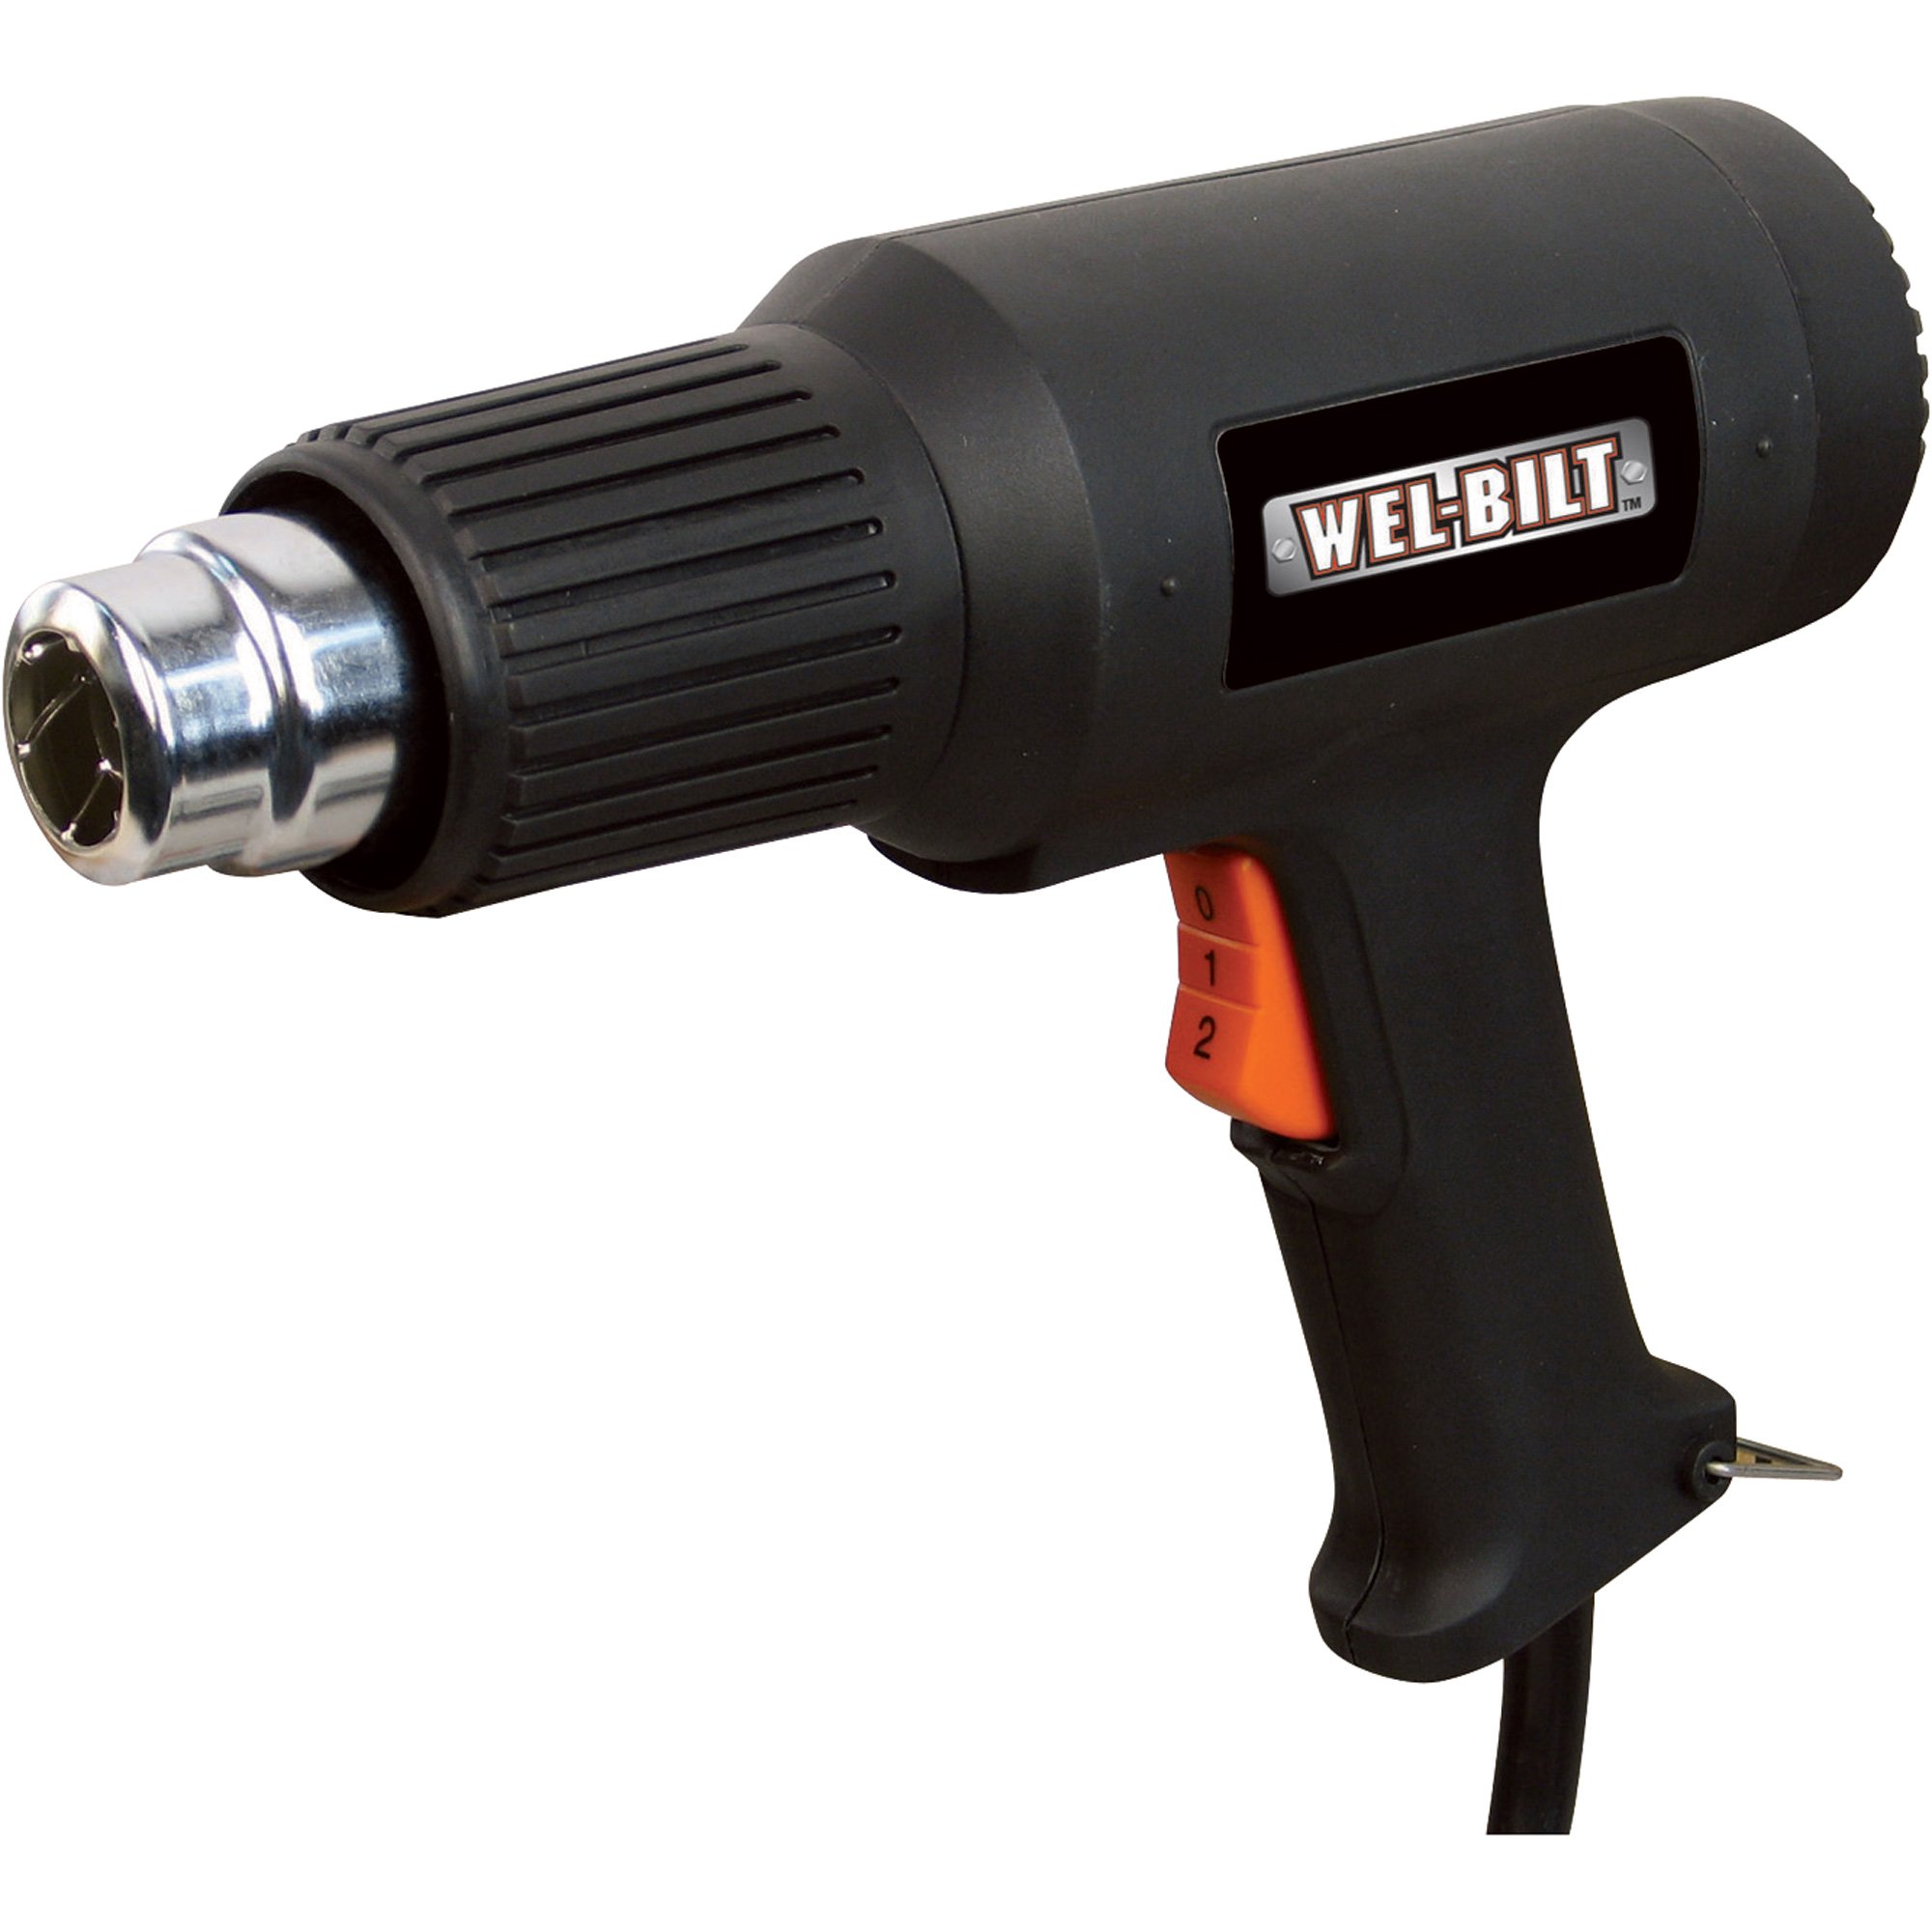 Milwaukee Dual Temperature Heat Gun Review 8975-6 - Pro Tool Reviews